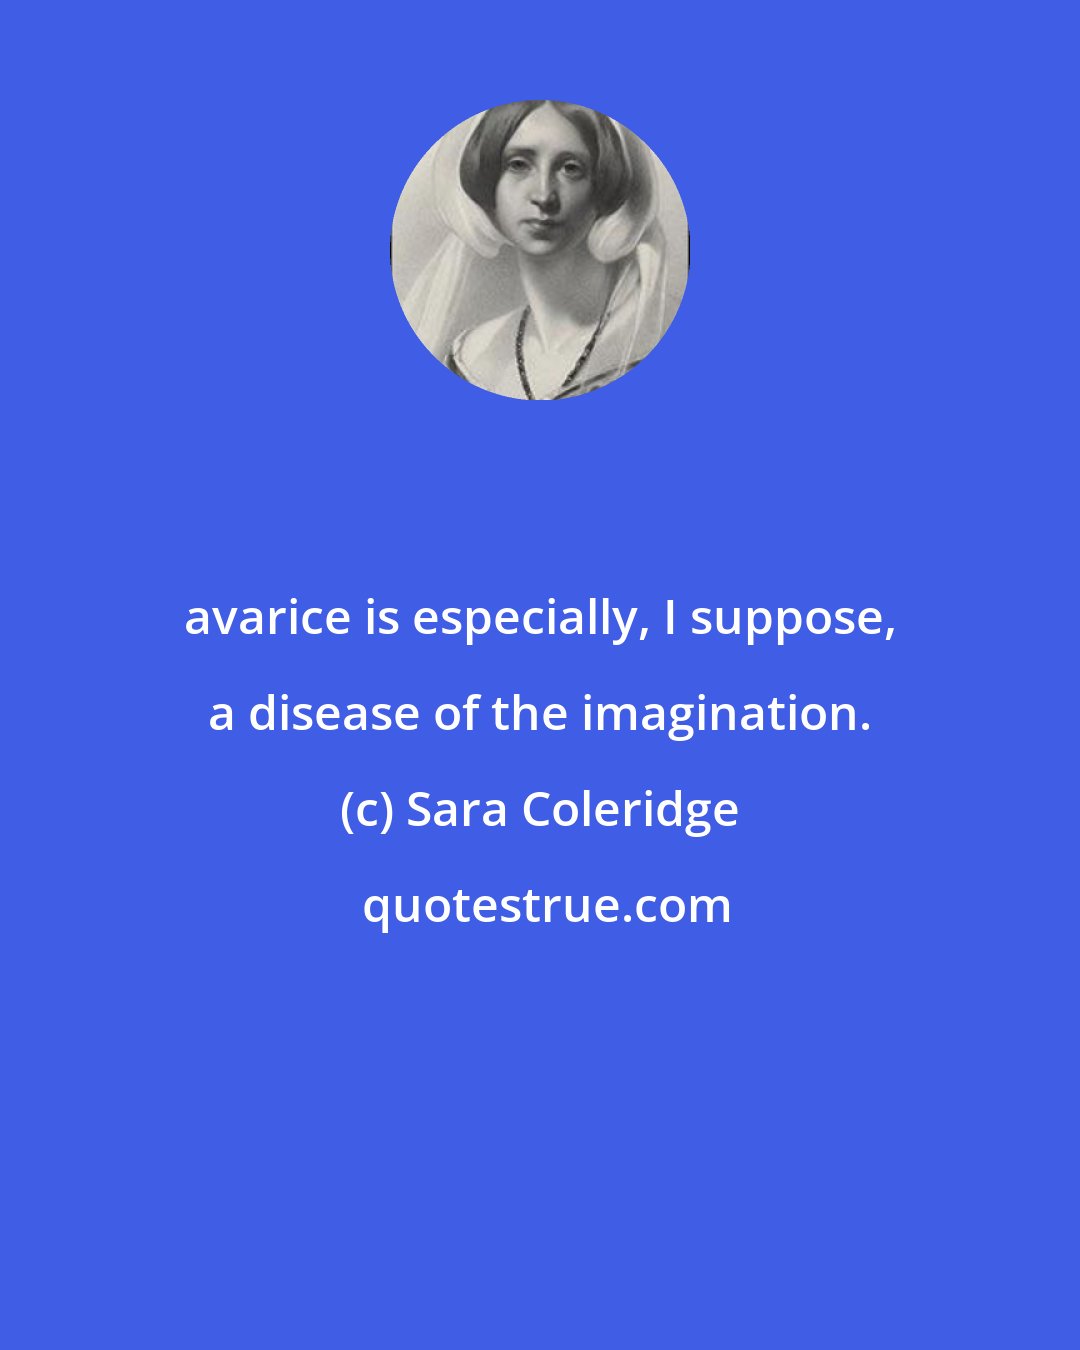 Sara Coleridge: avarice is especially, I suppose, a disease of the imagination.